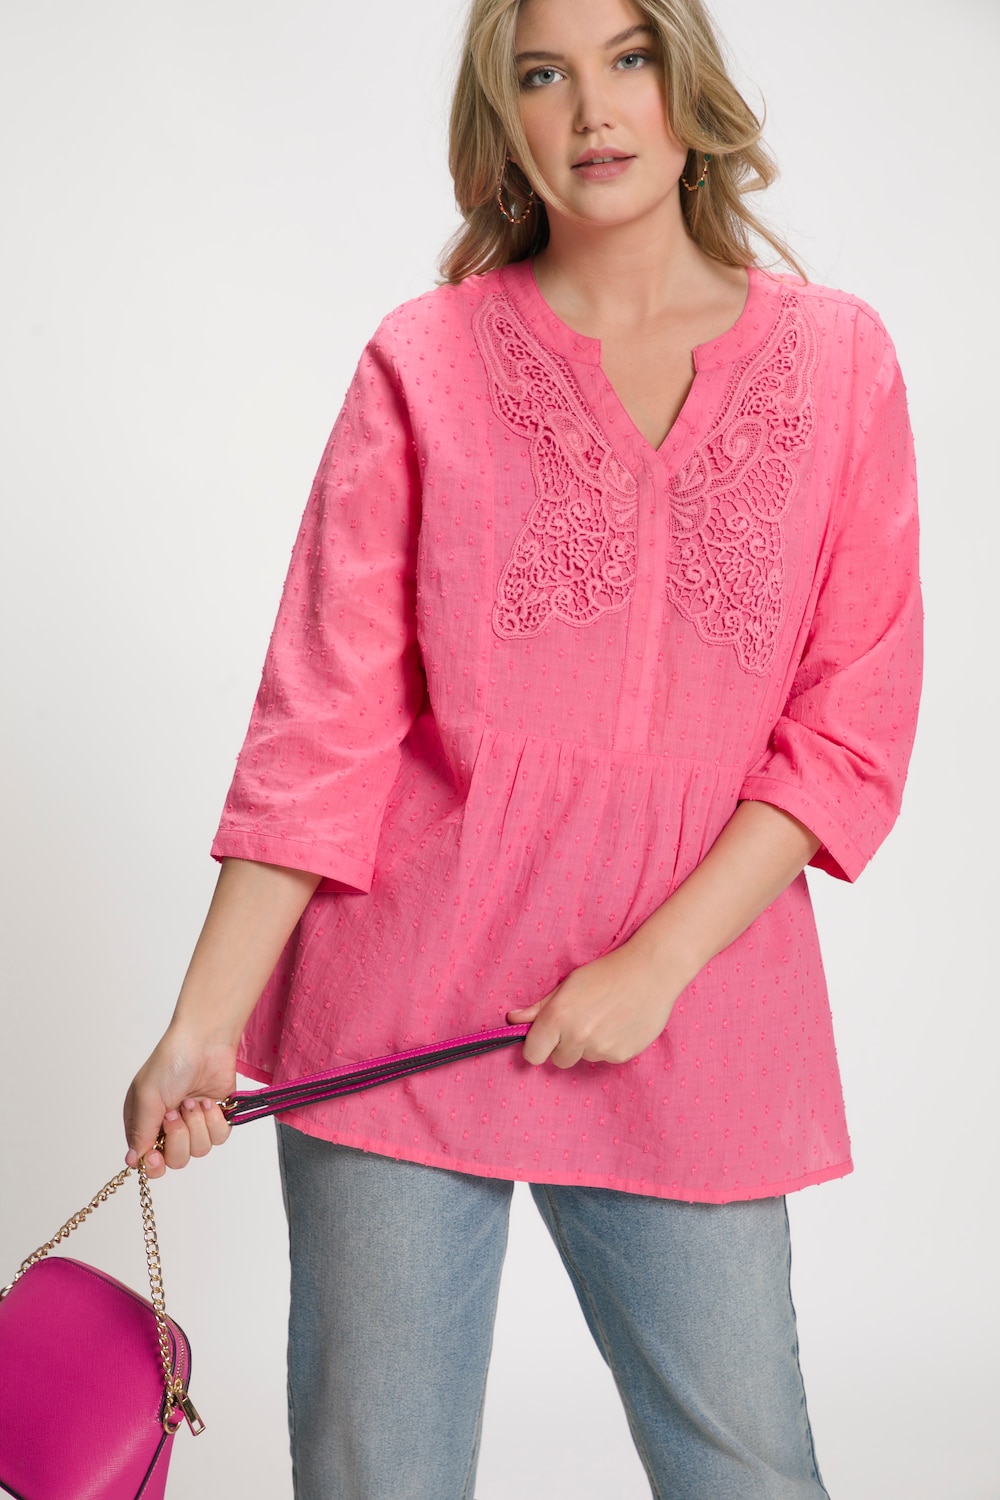 Plus Size Dotted Swiss Lace Applique Lightweight Blouse, Woman, pink, size: 16/18, cotton, Ulla Popken